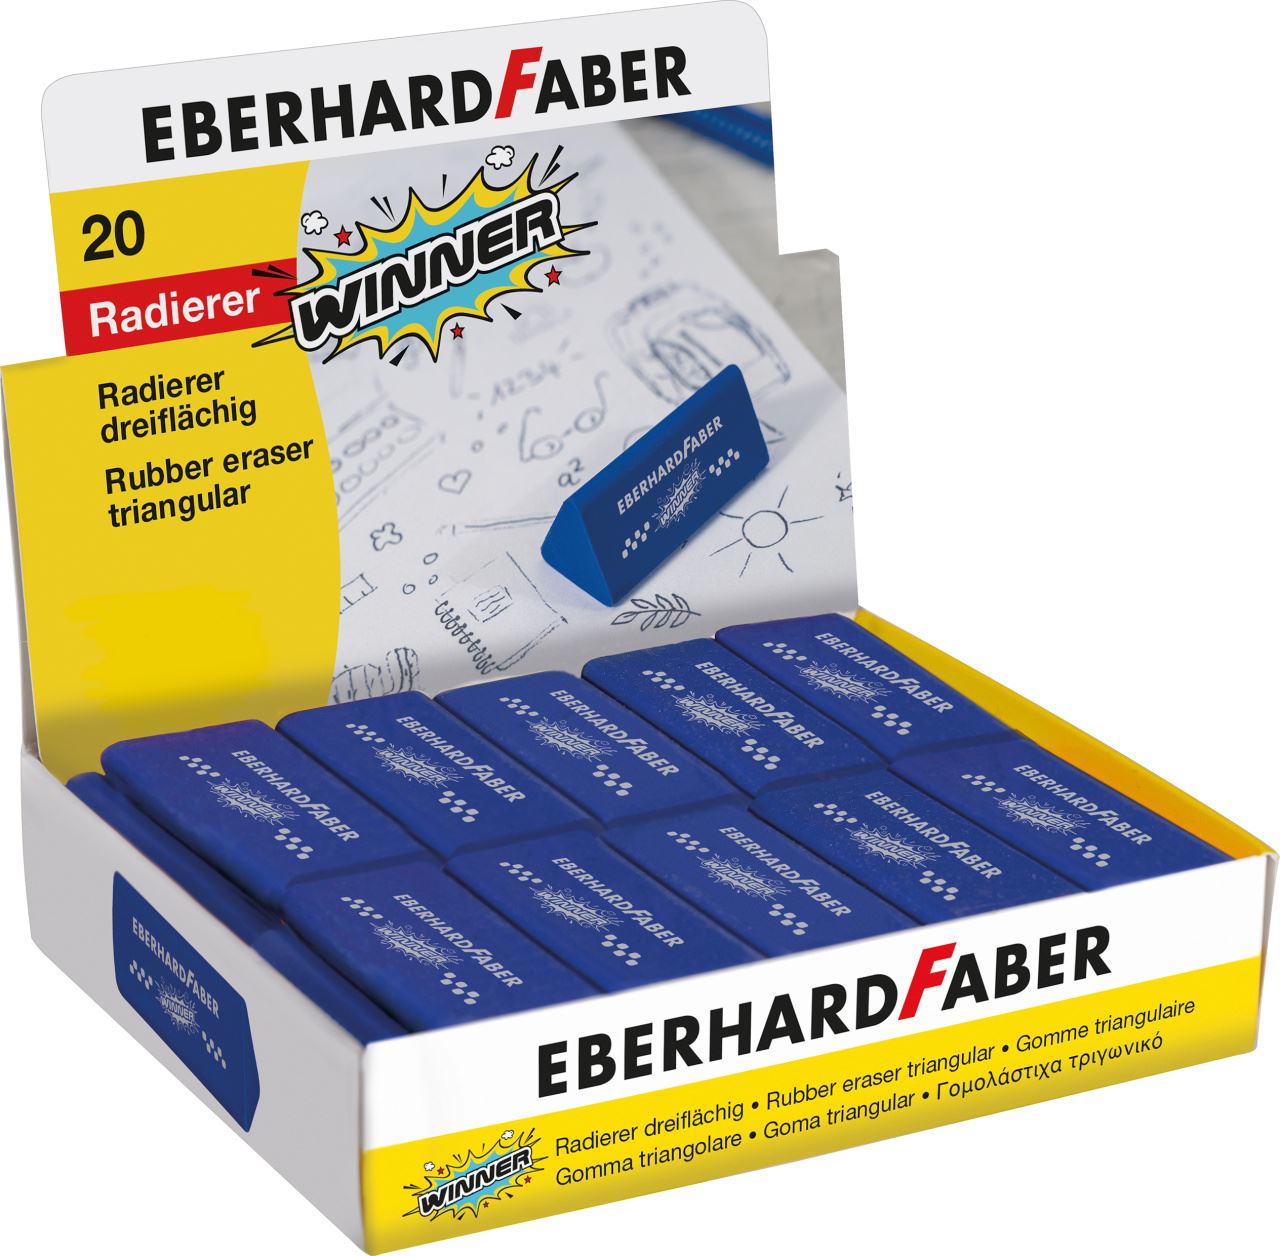 Eberhard-Faber - Radierer Winner blau dreiflächig